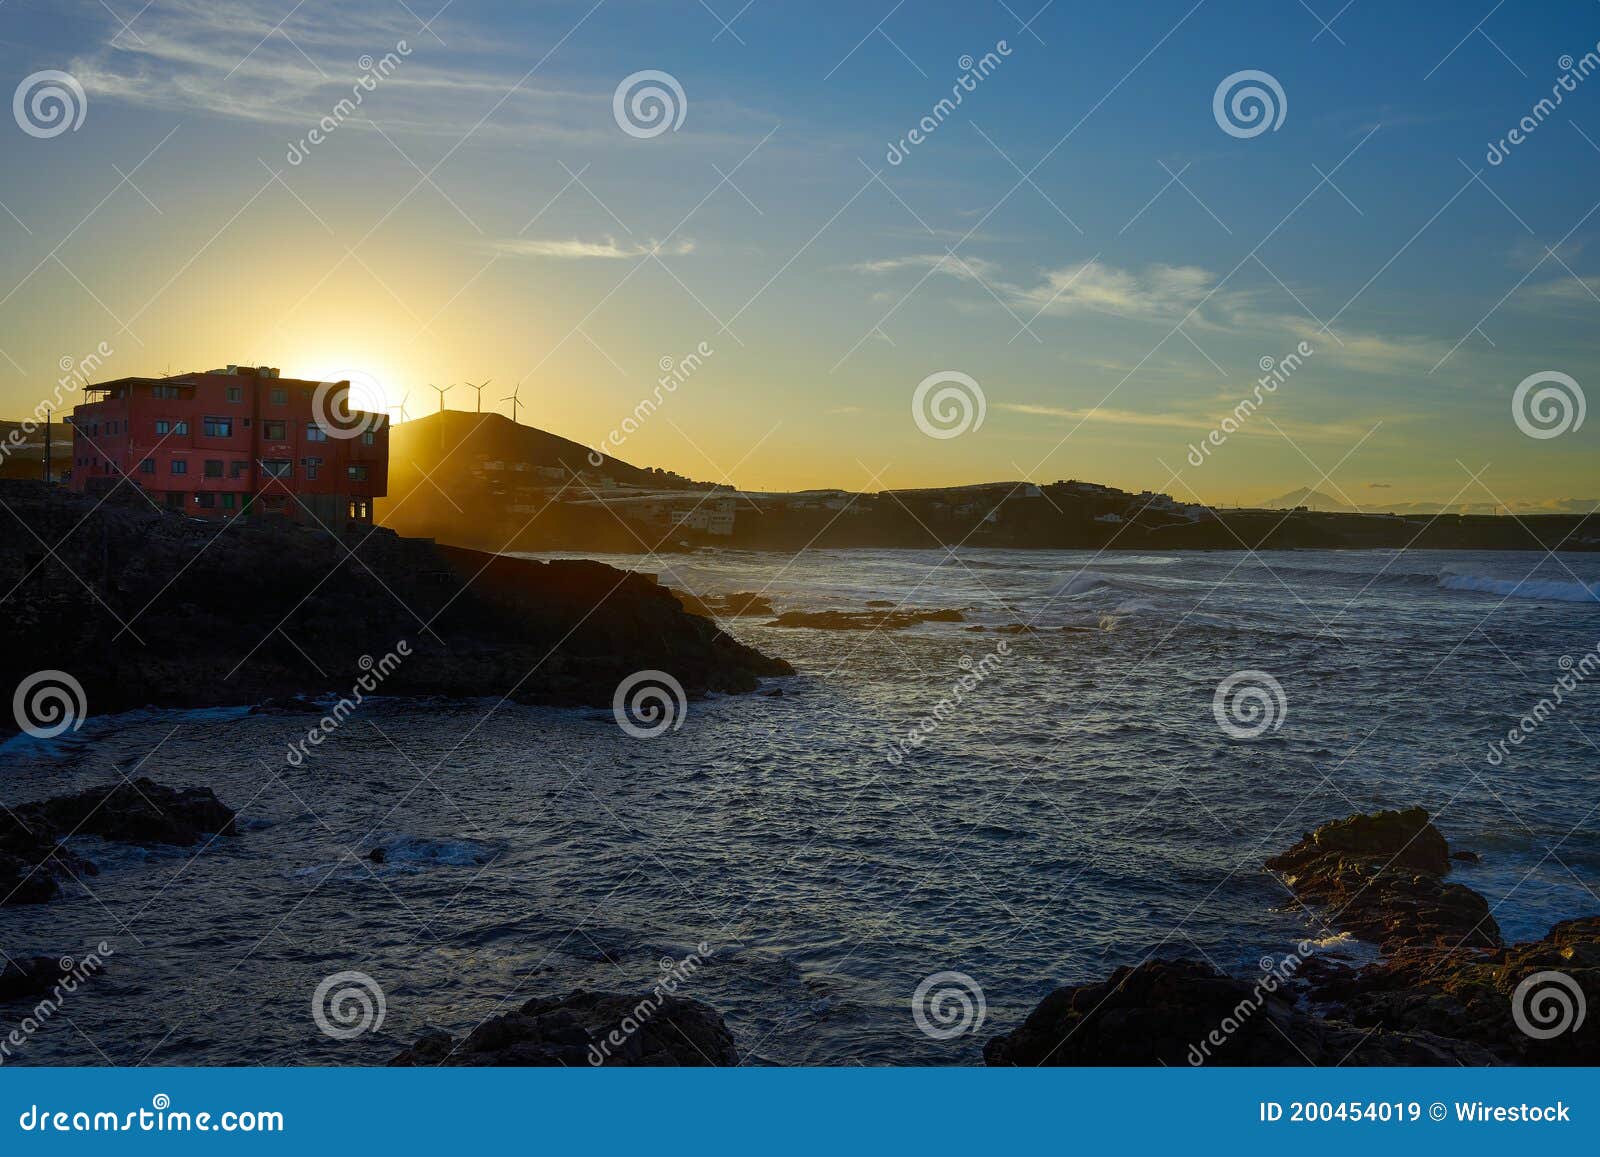 beautiful sunset on the agujero beach, galdar, gran canaria, spain